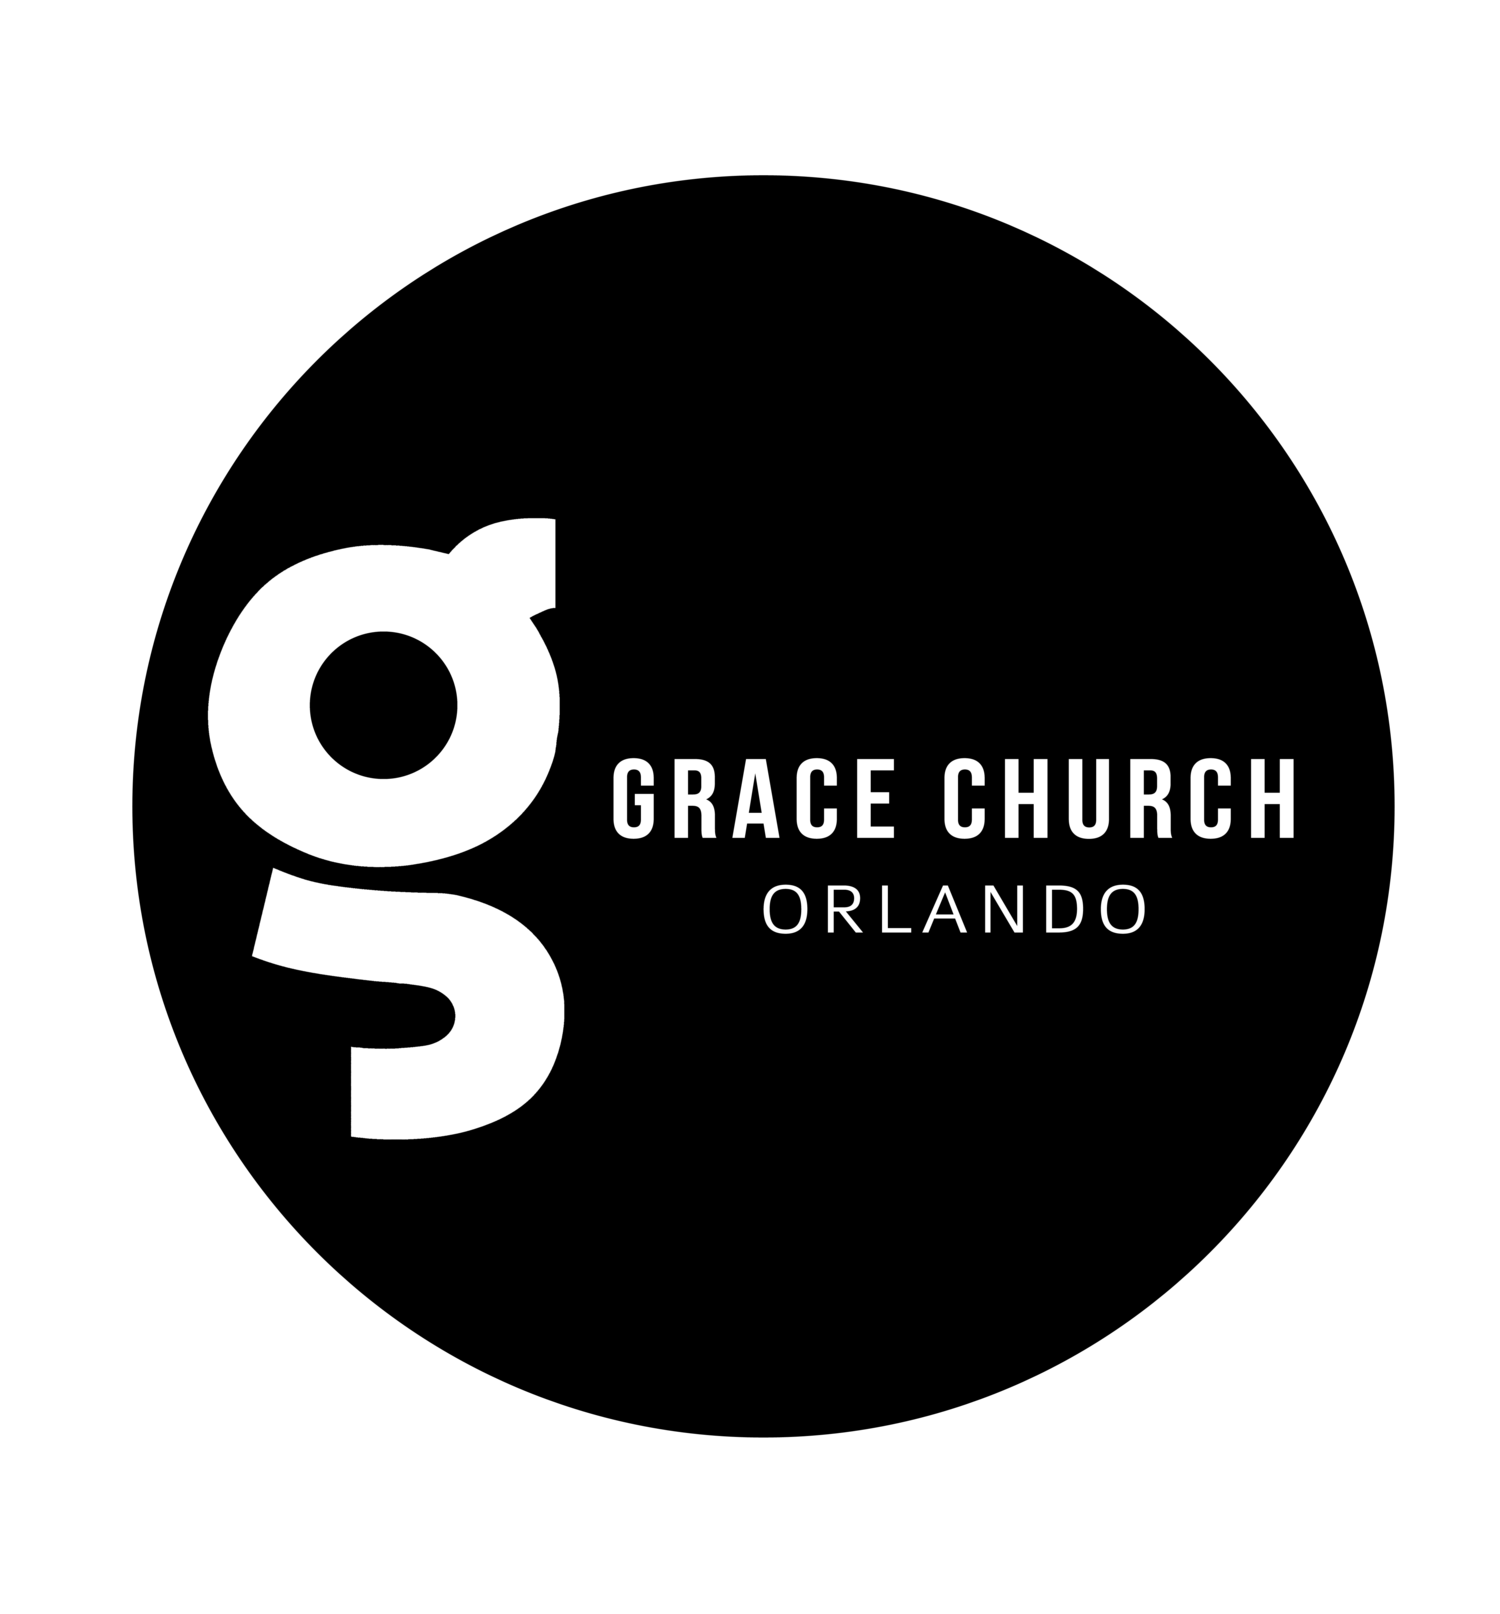 Grace CHURCH ORLANDO